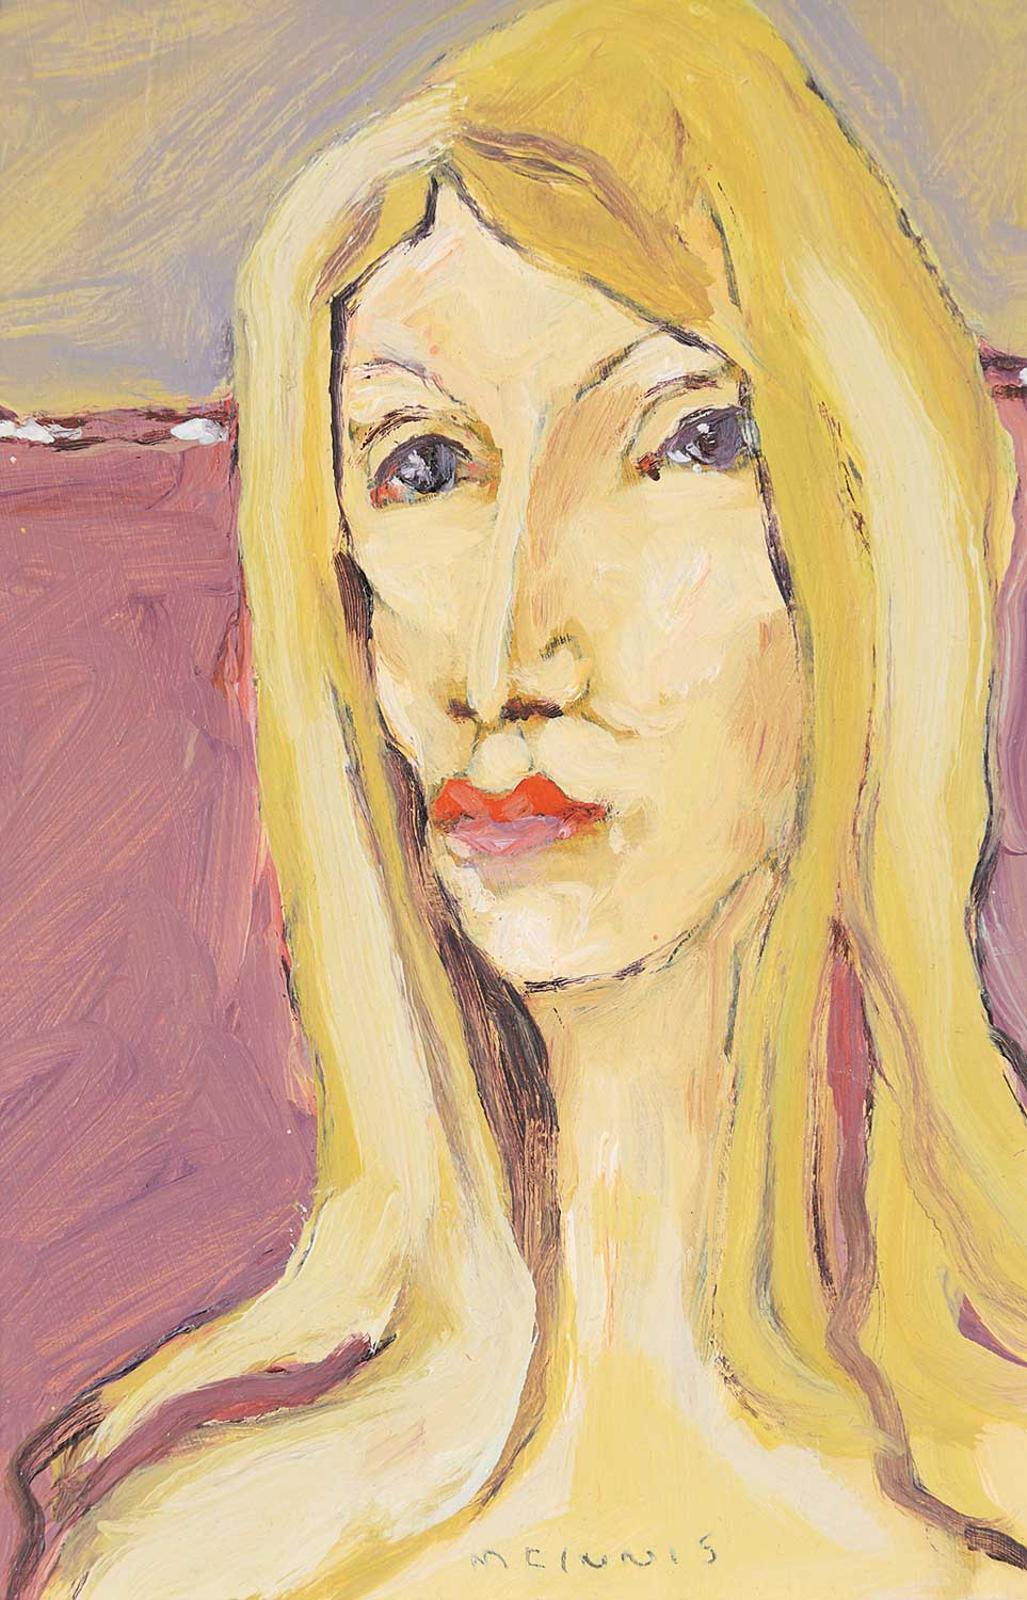 Robert F.M. McInnis (1942) - Untitled - Portrait of a Blonde Woman